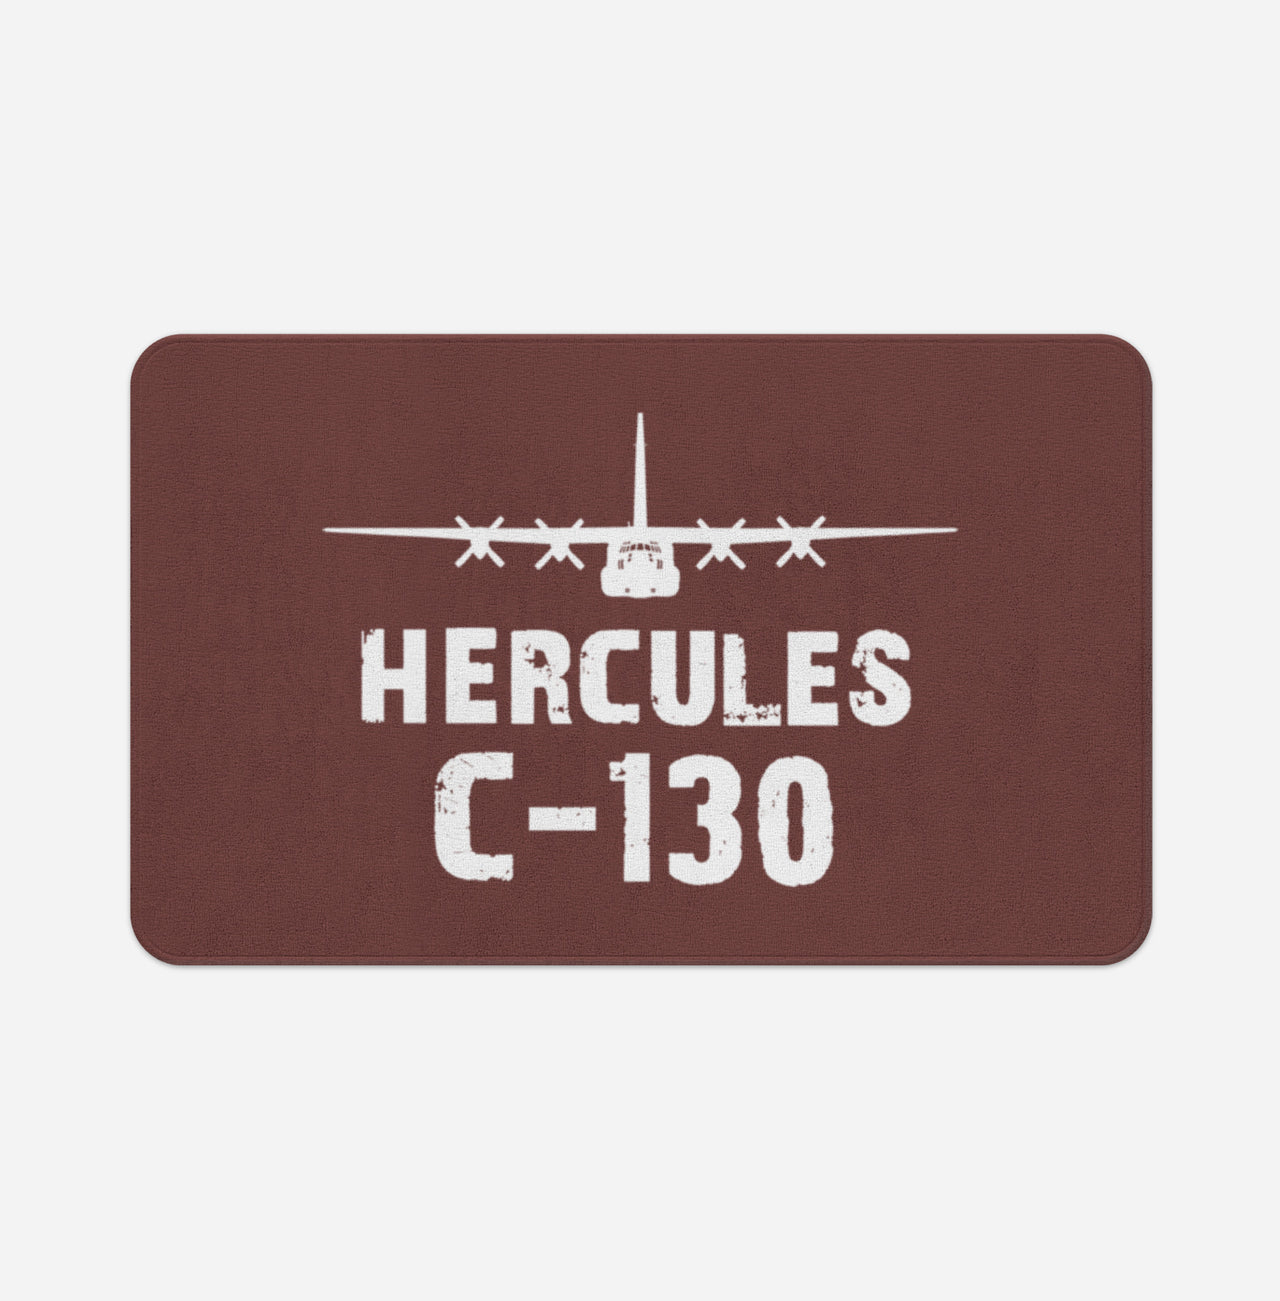 Hercules C-130 & Plane Designed Bath Mats